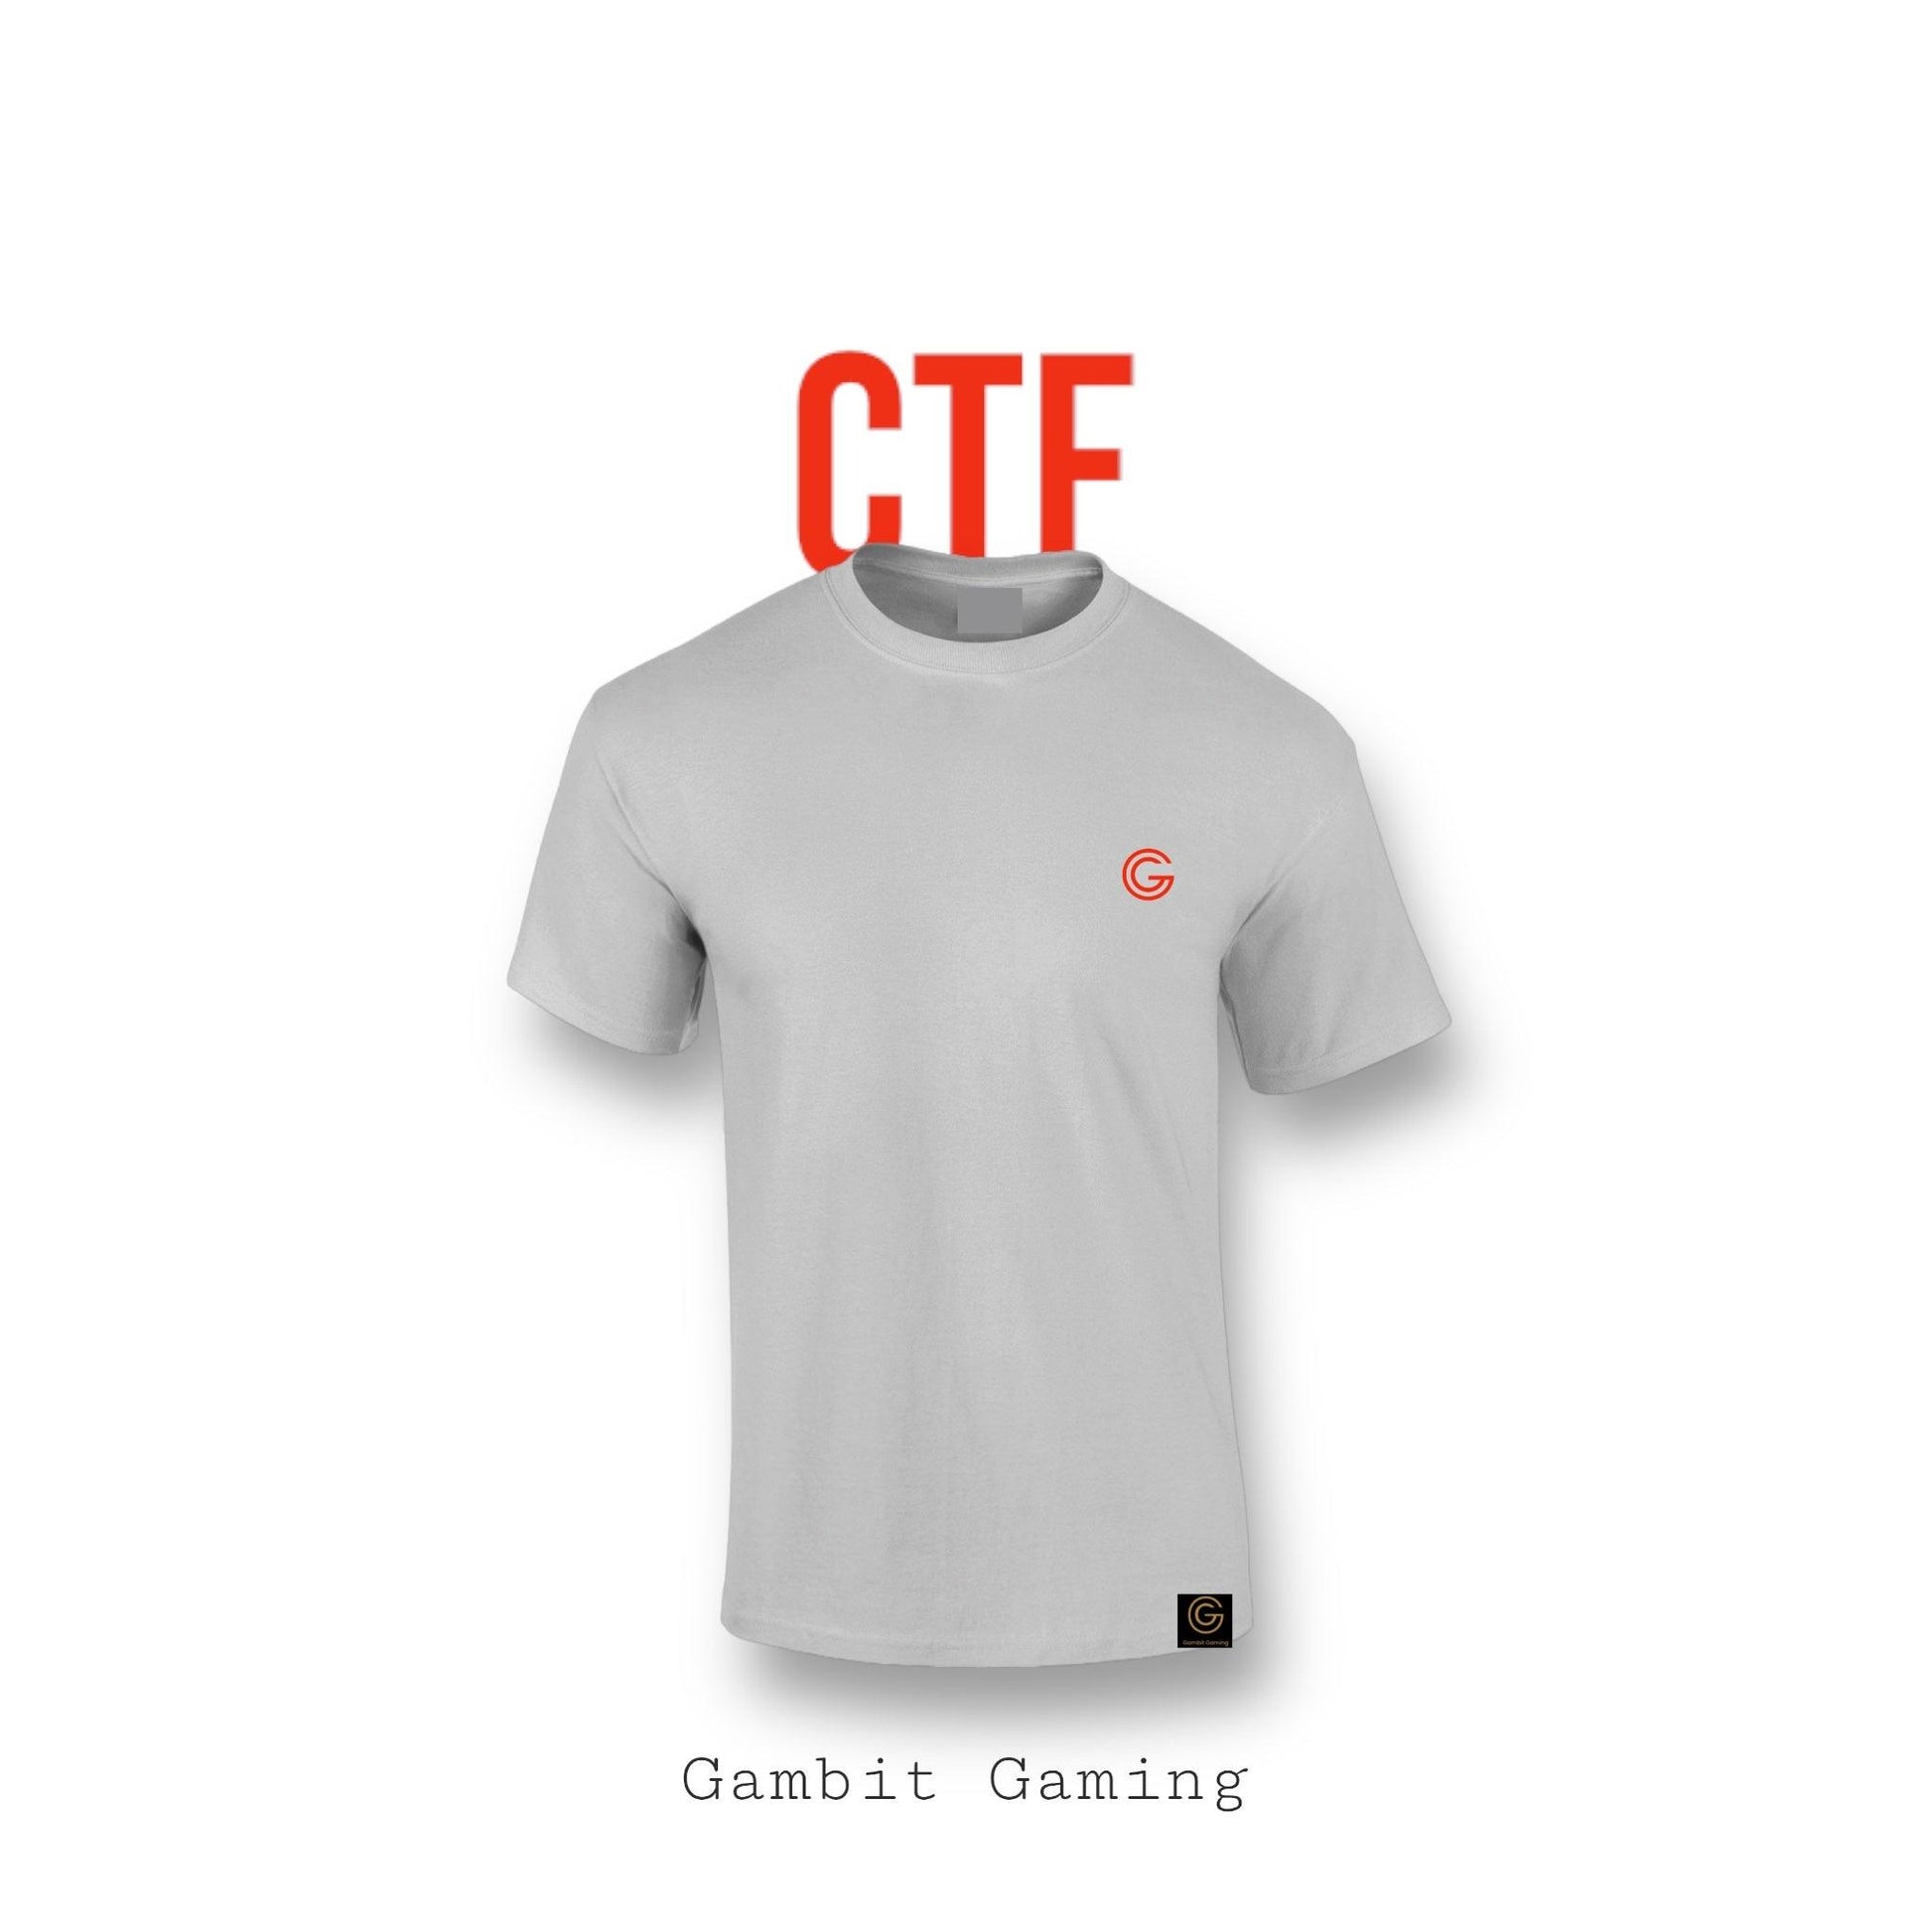 CTF T-shirt - Gambit Gaming